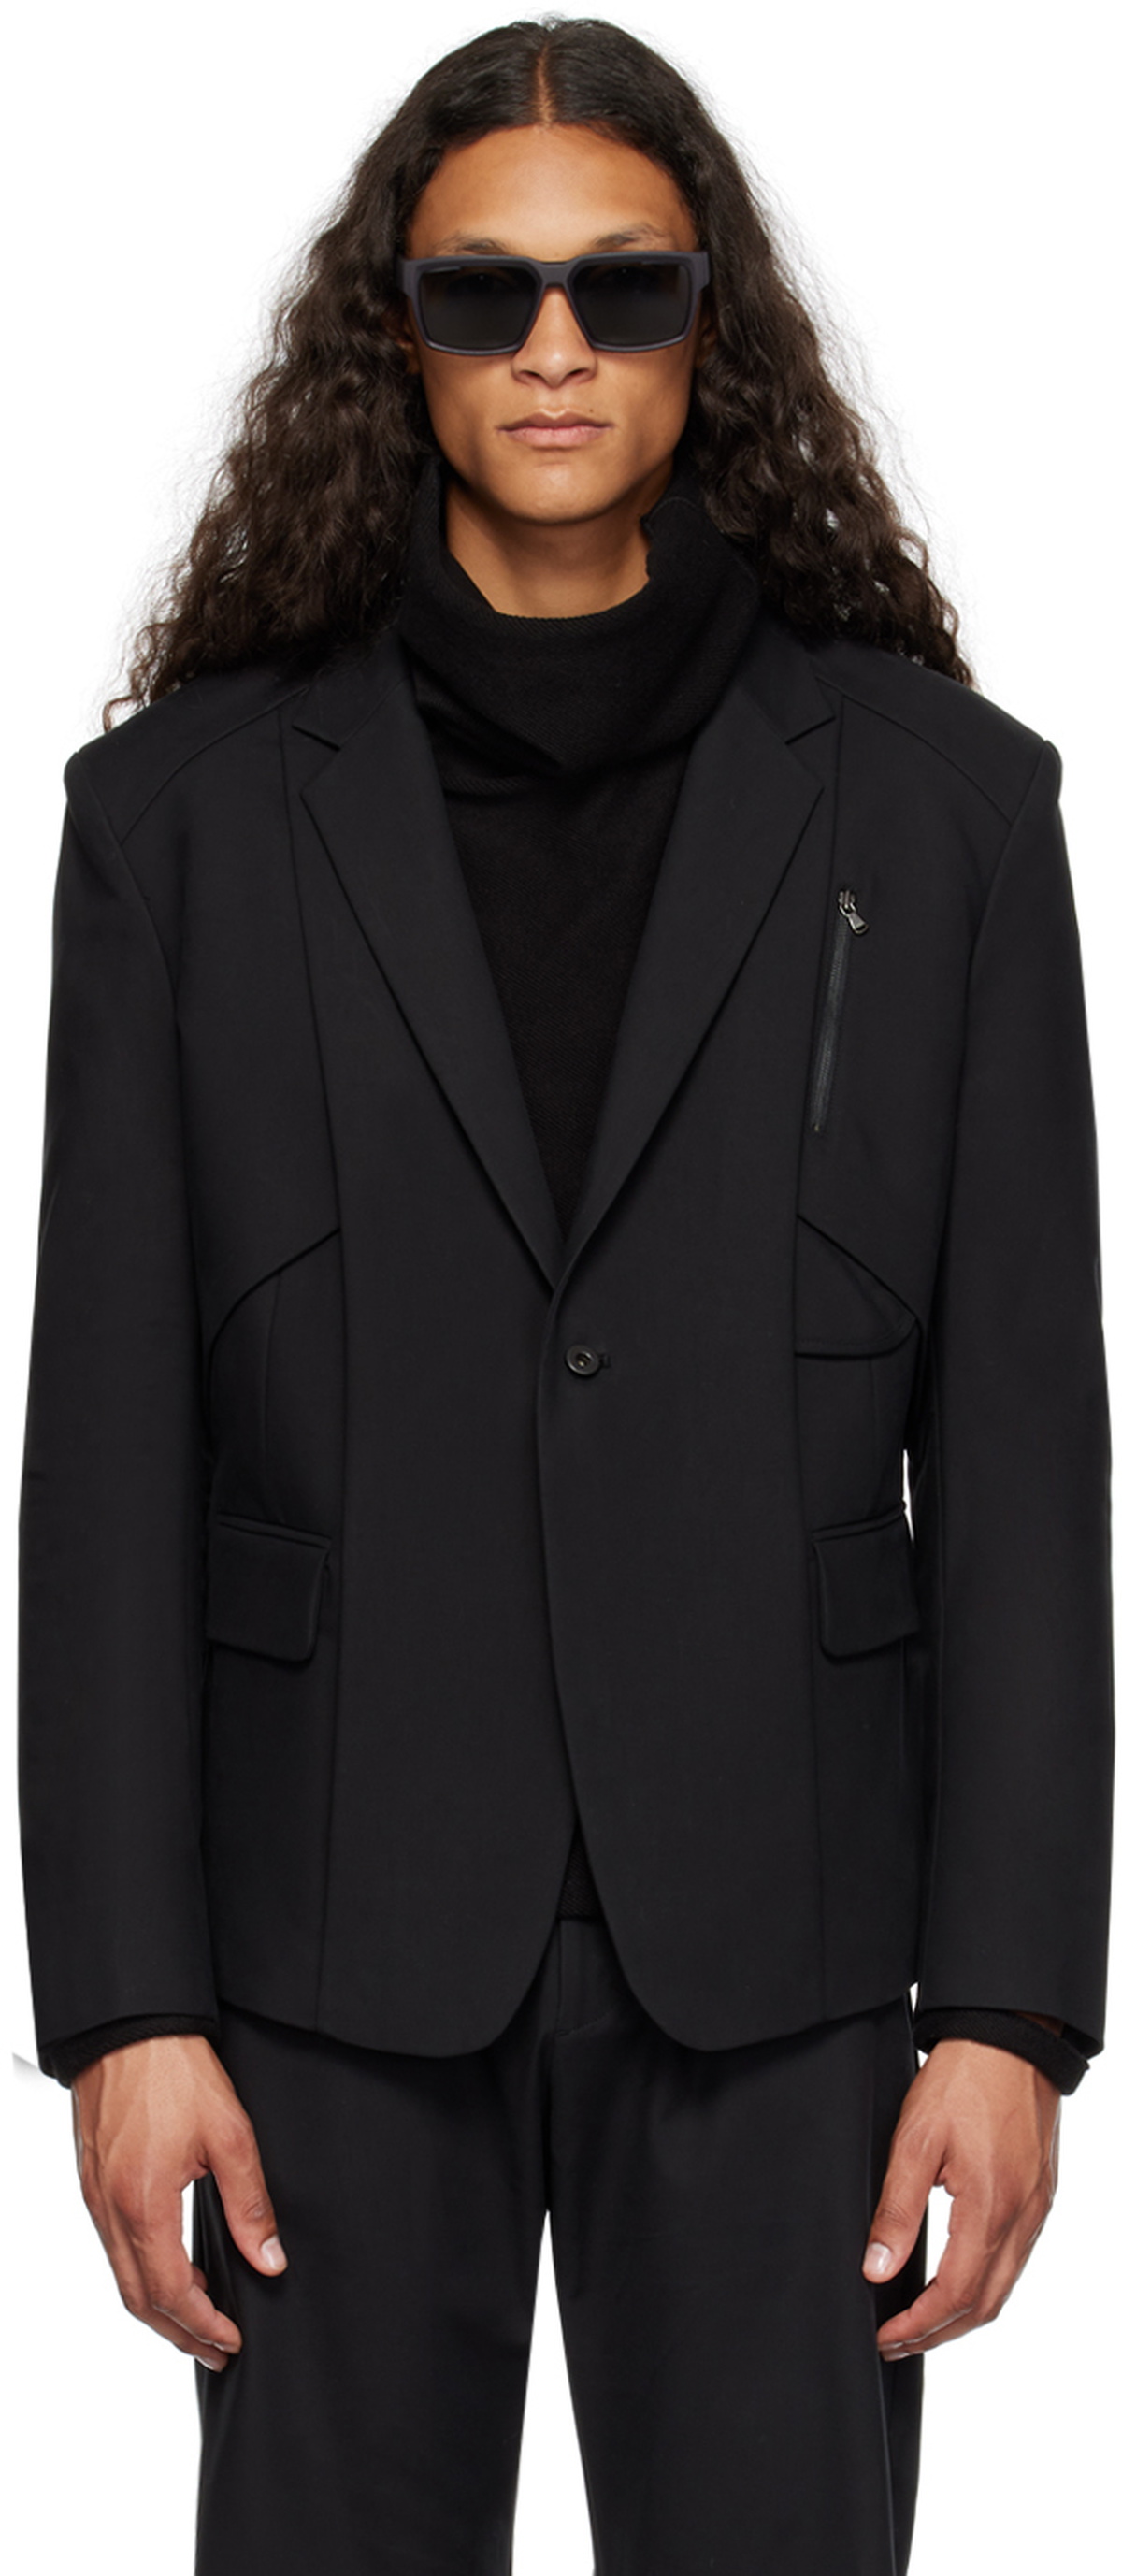 CARNET-ARCHIVE Black Architectural Tailored Blazer CARNET-ARCHIVE